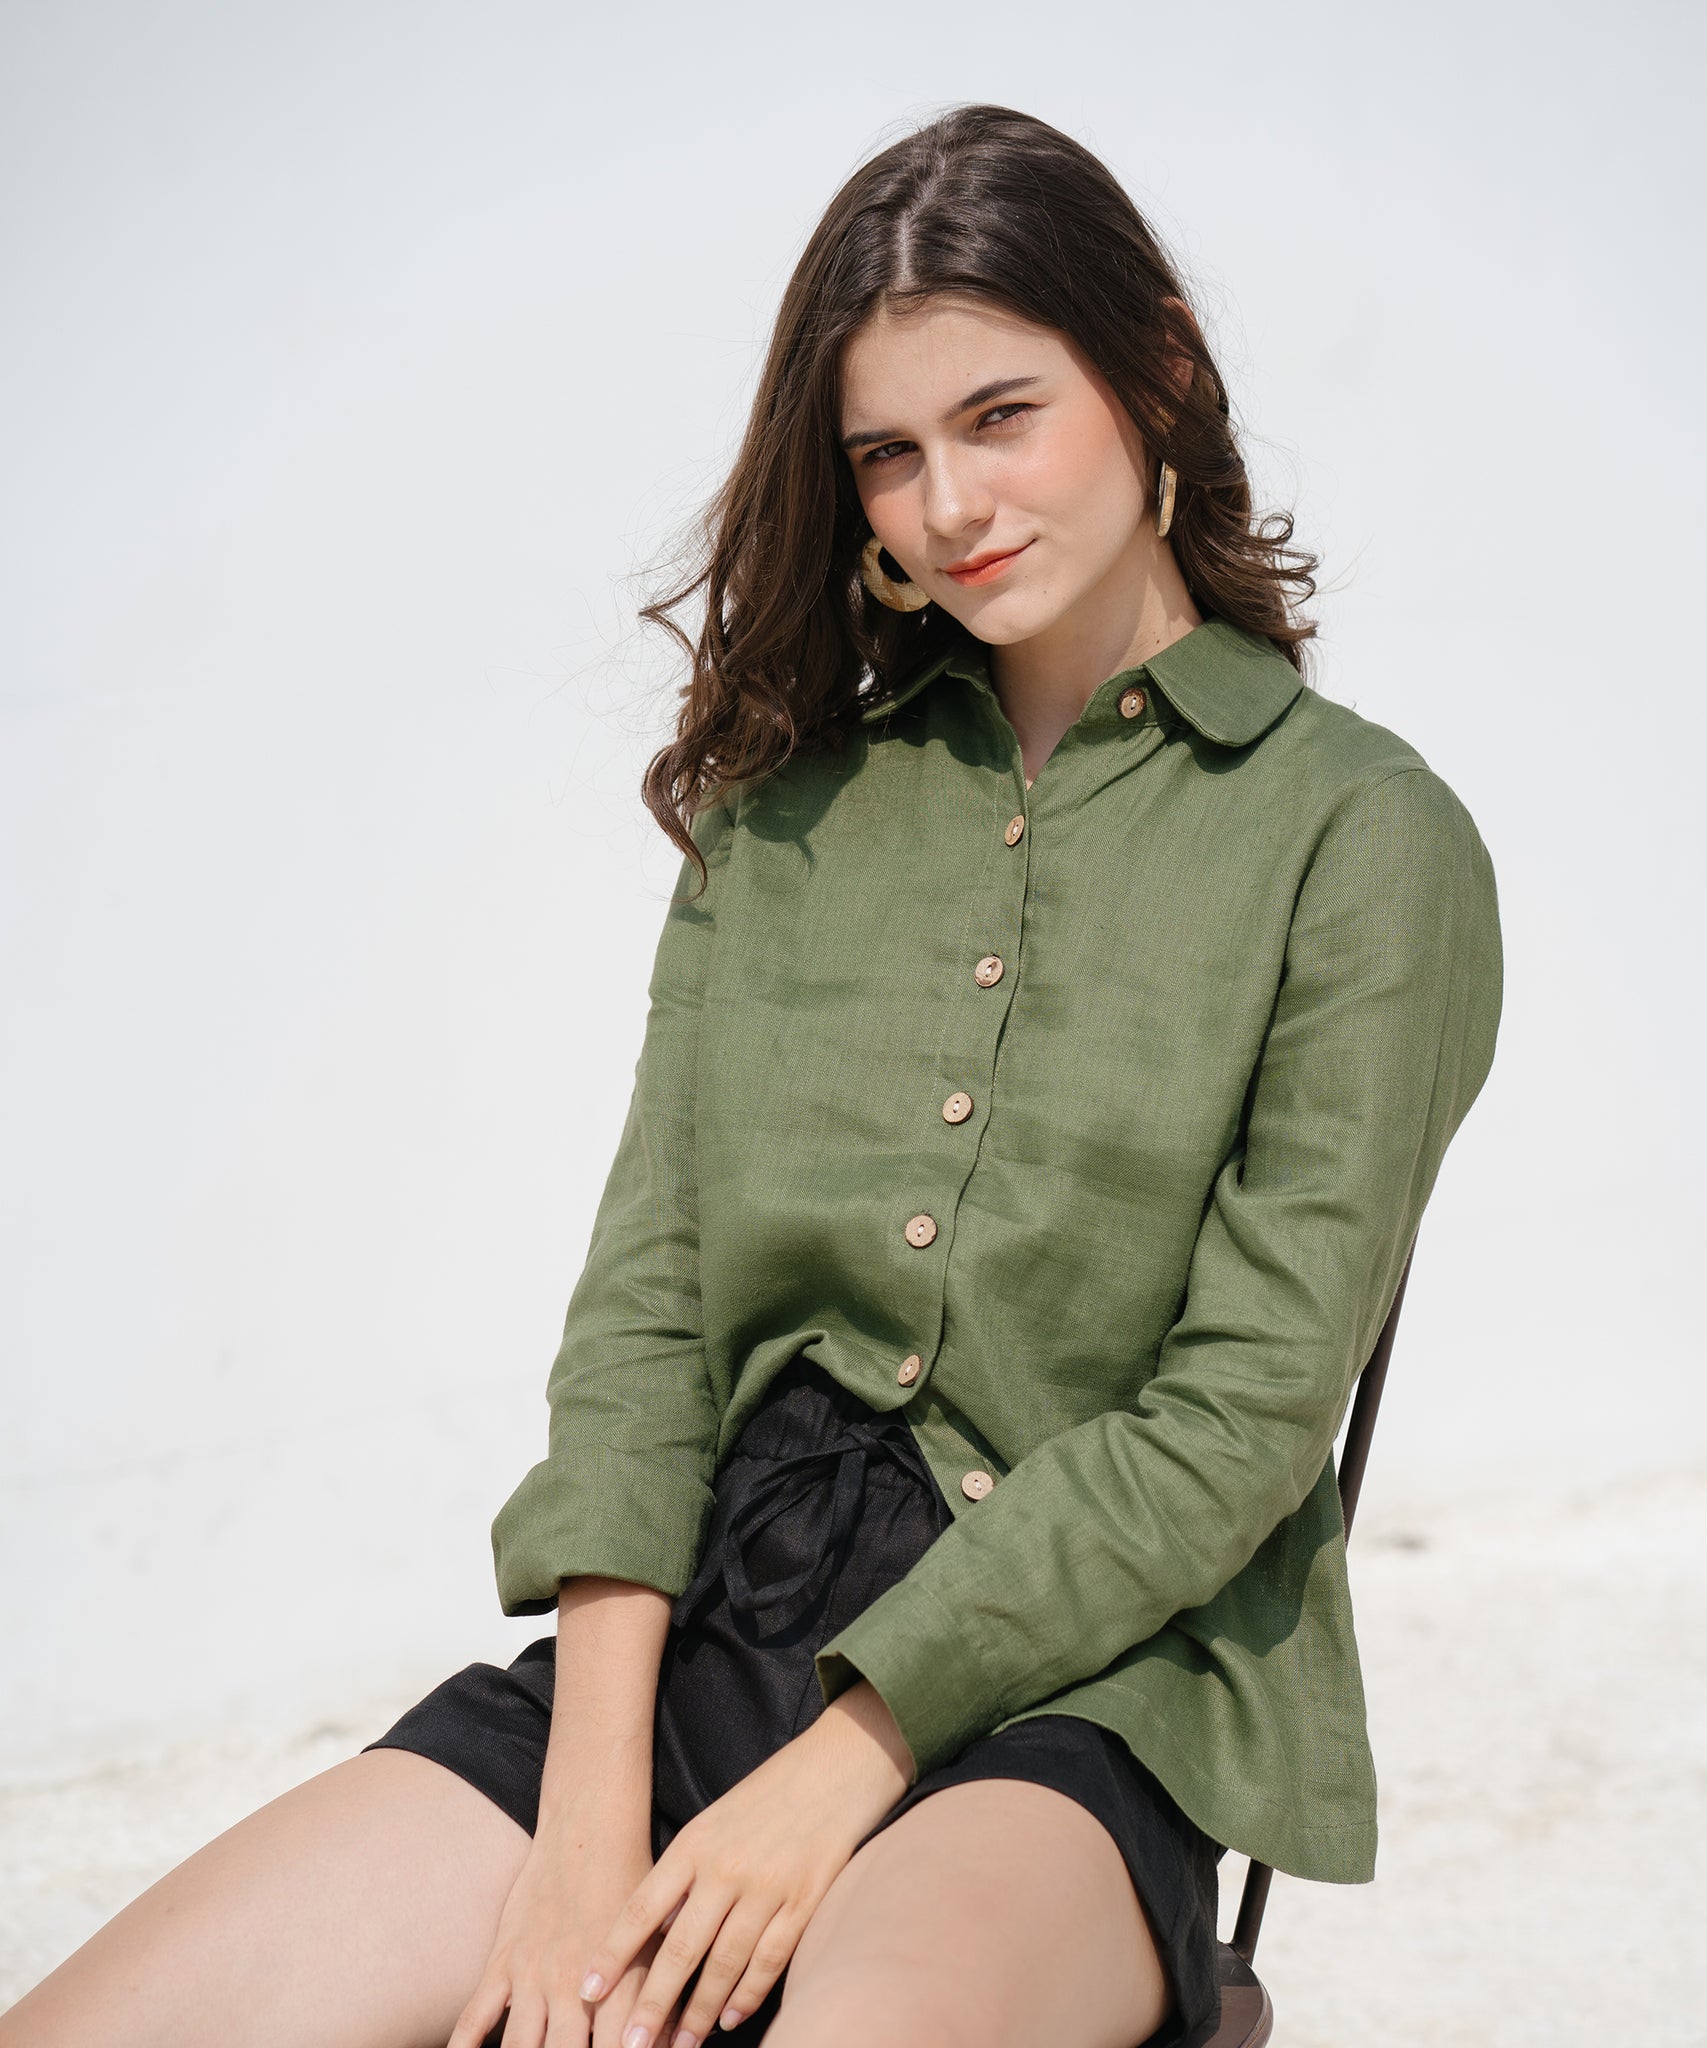 Long-sleeved Tunic - Khaki green - Ladies